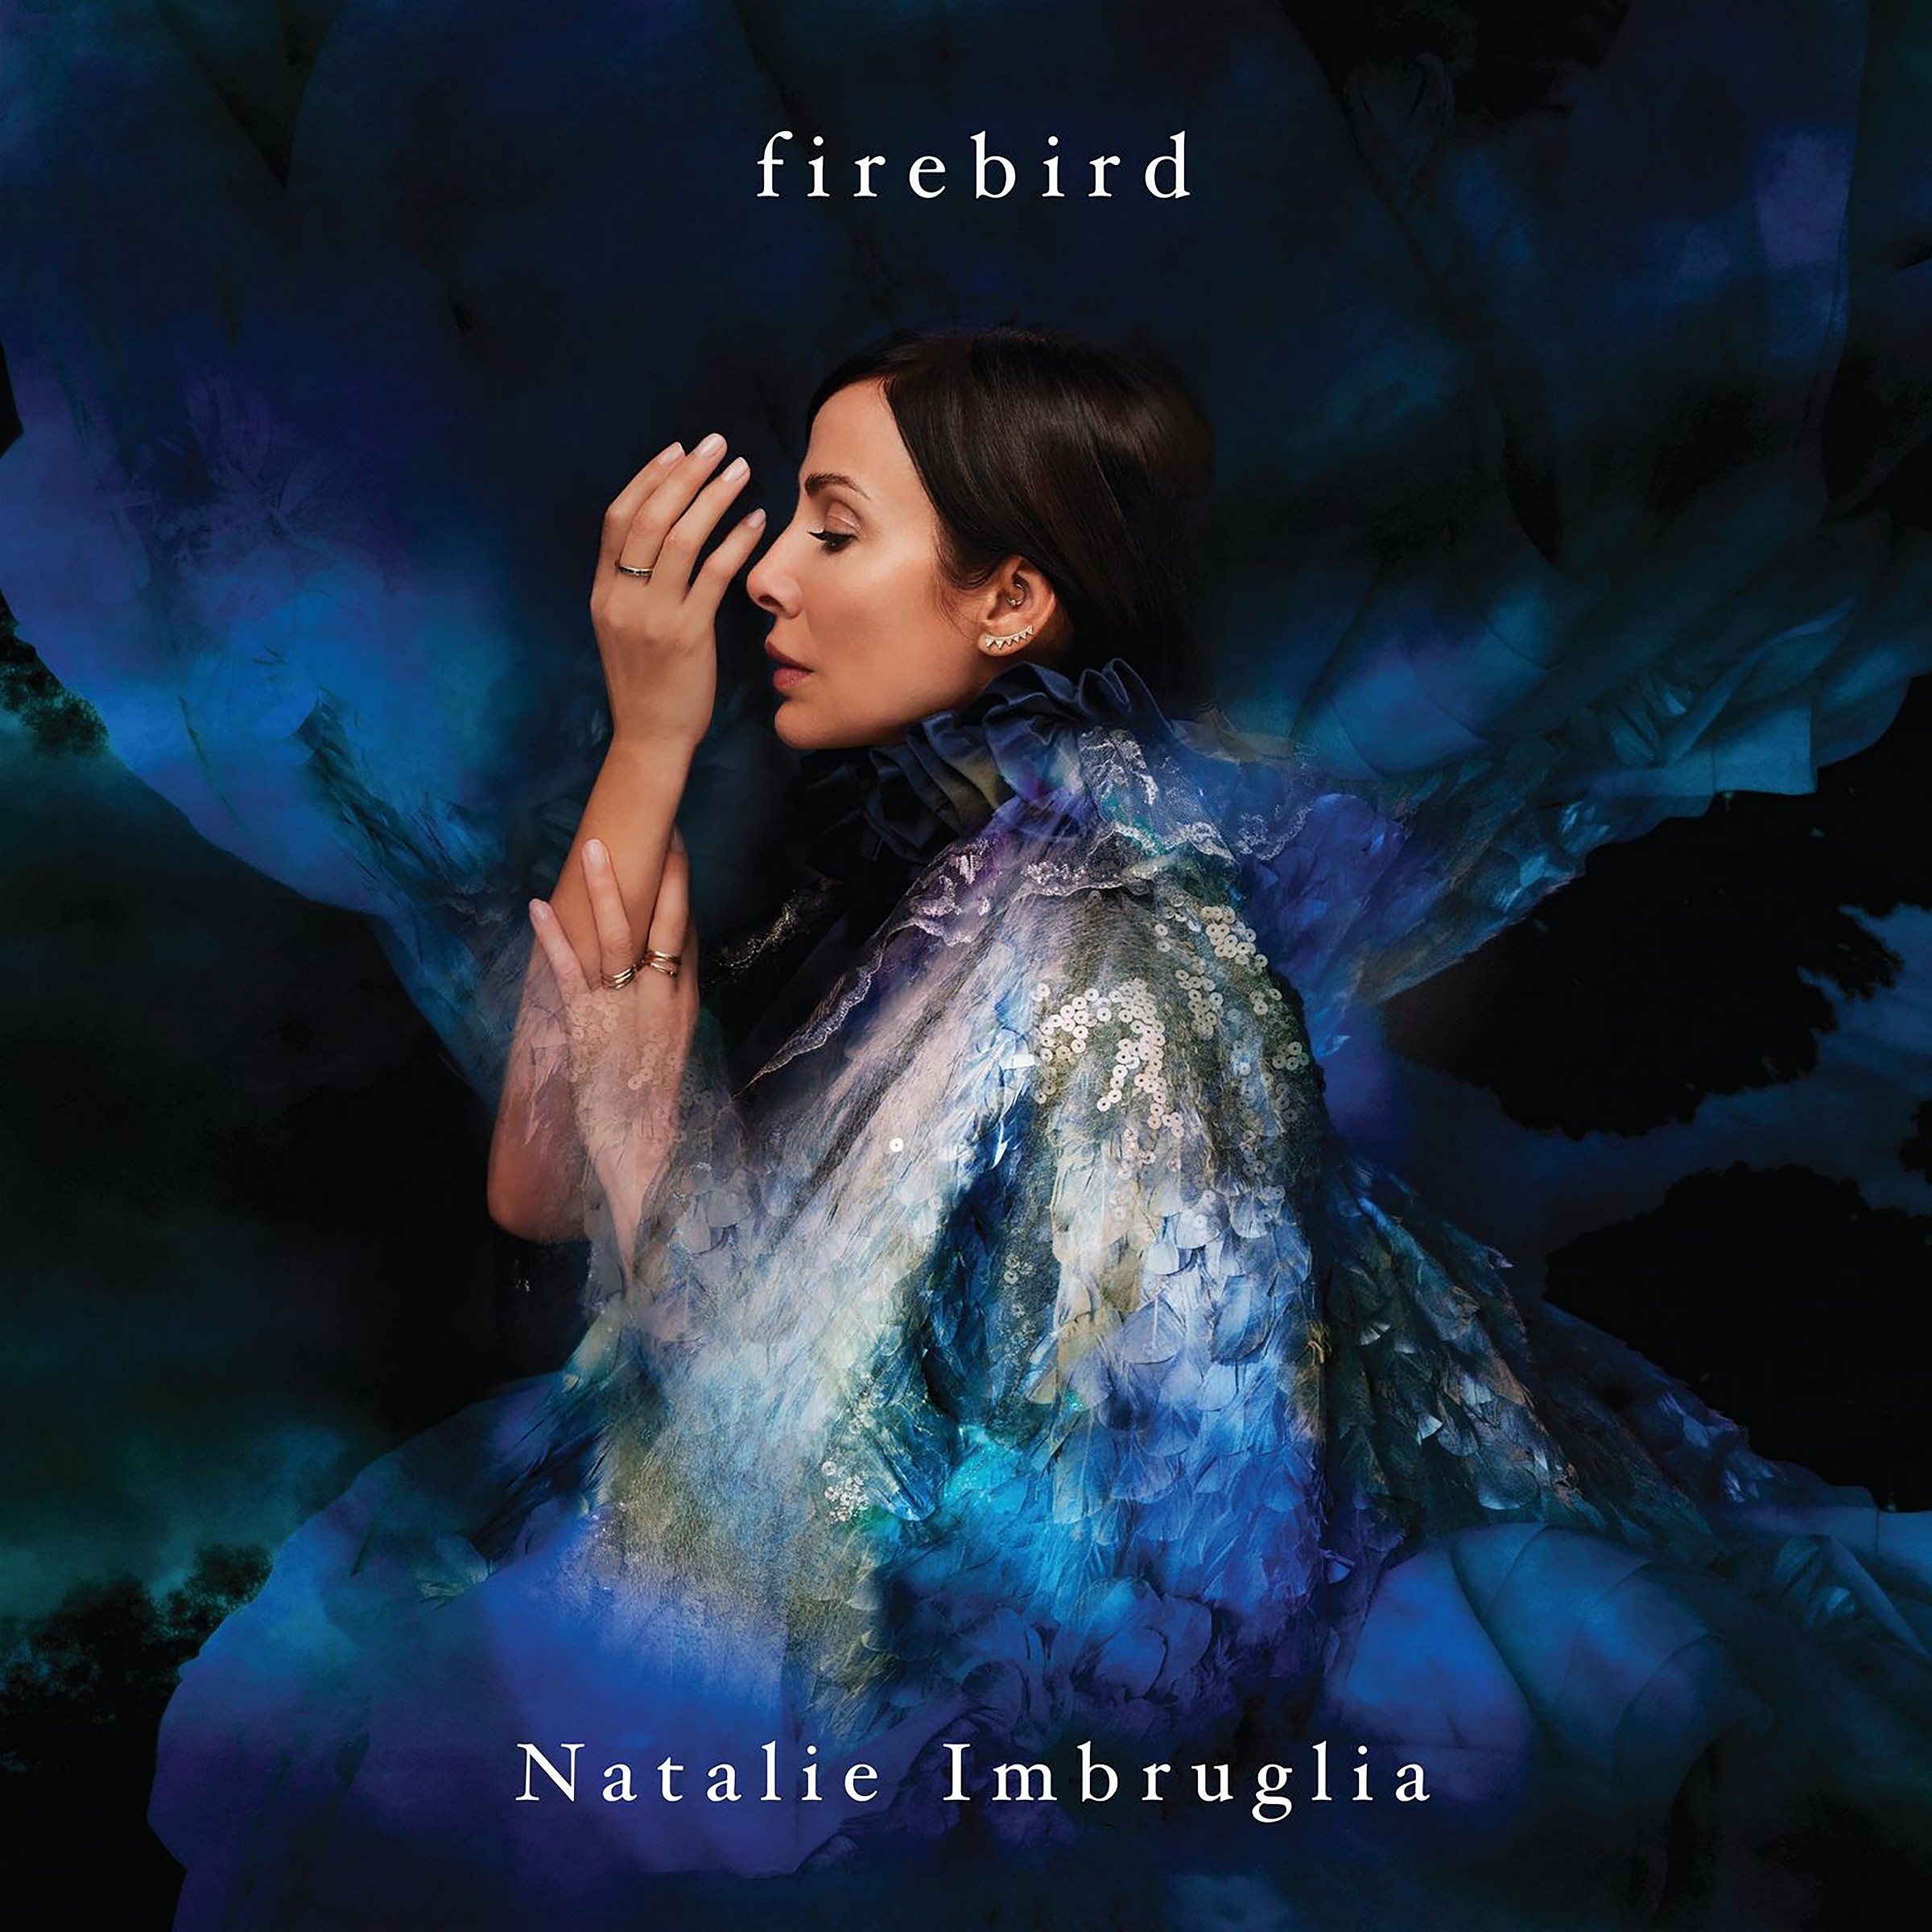 Natalie Imbruglia - Firebird - Album Cover POSTER - Lost Posters